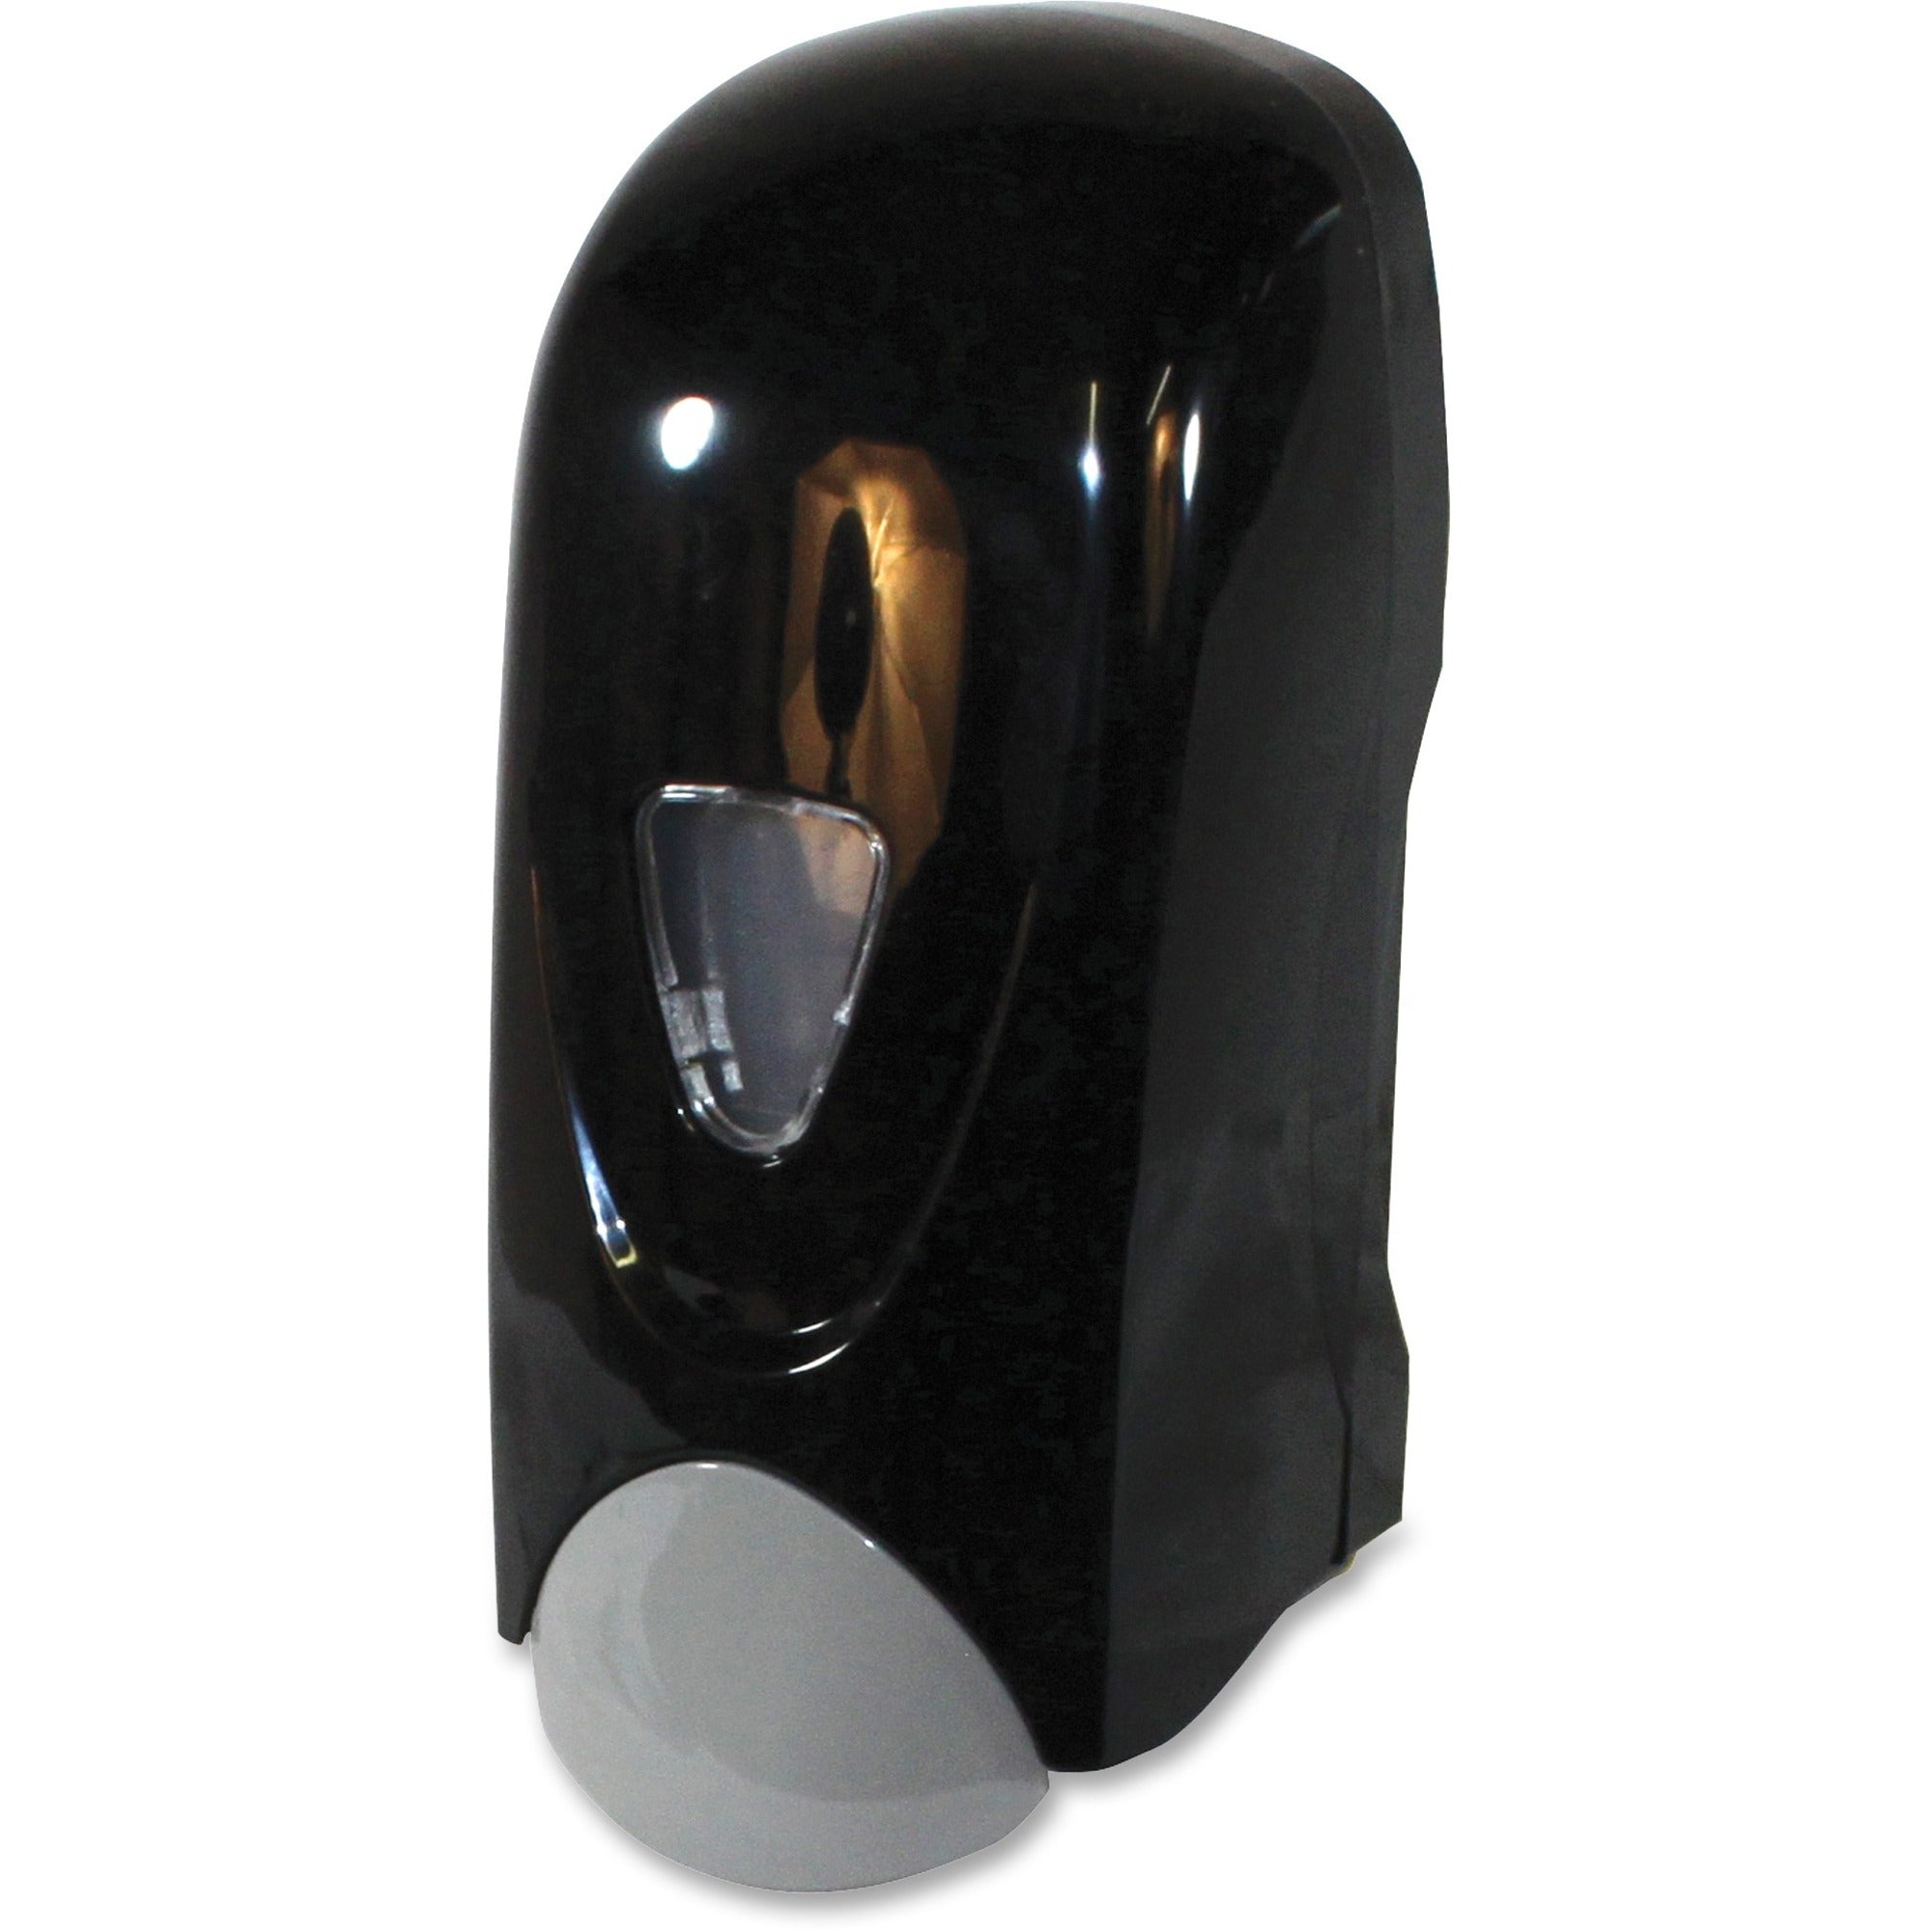 Genuine Joe Foam Soap Dispenser - Manual - 1.06 quart Capacity - Black, Gray - 1Each - 